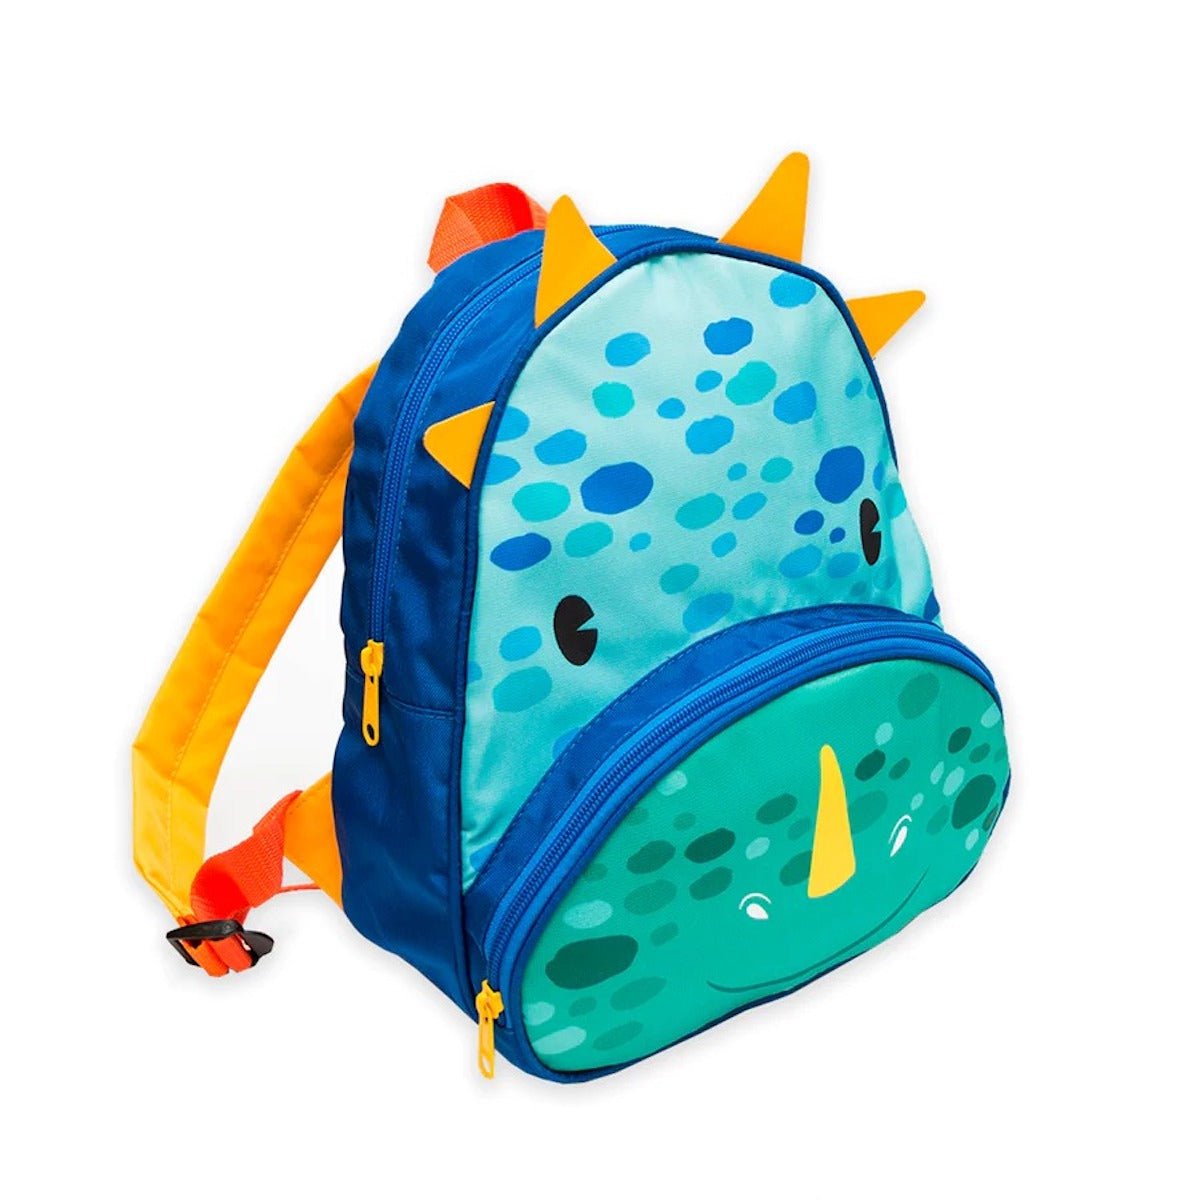 Kids' Character Backpack - EVAMAIA